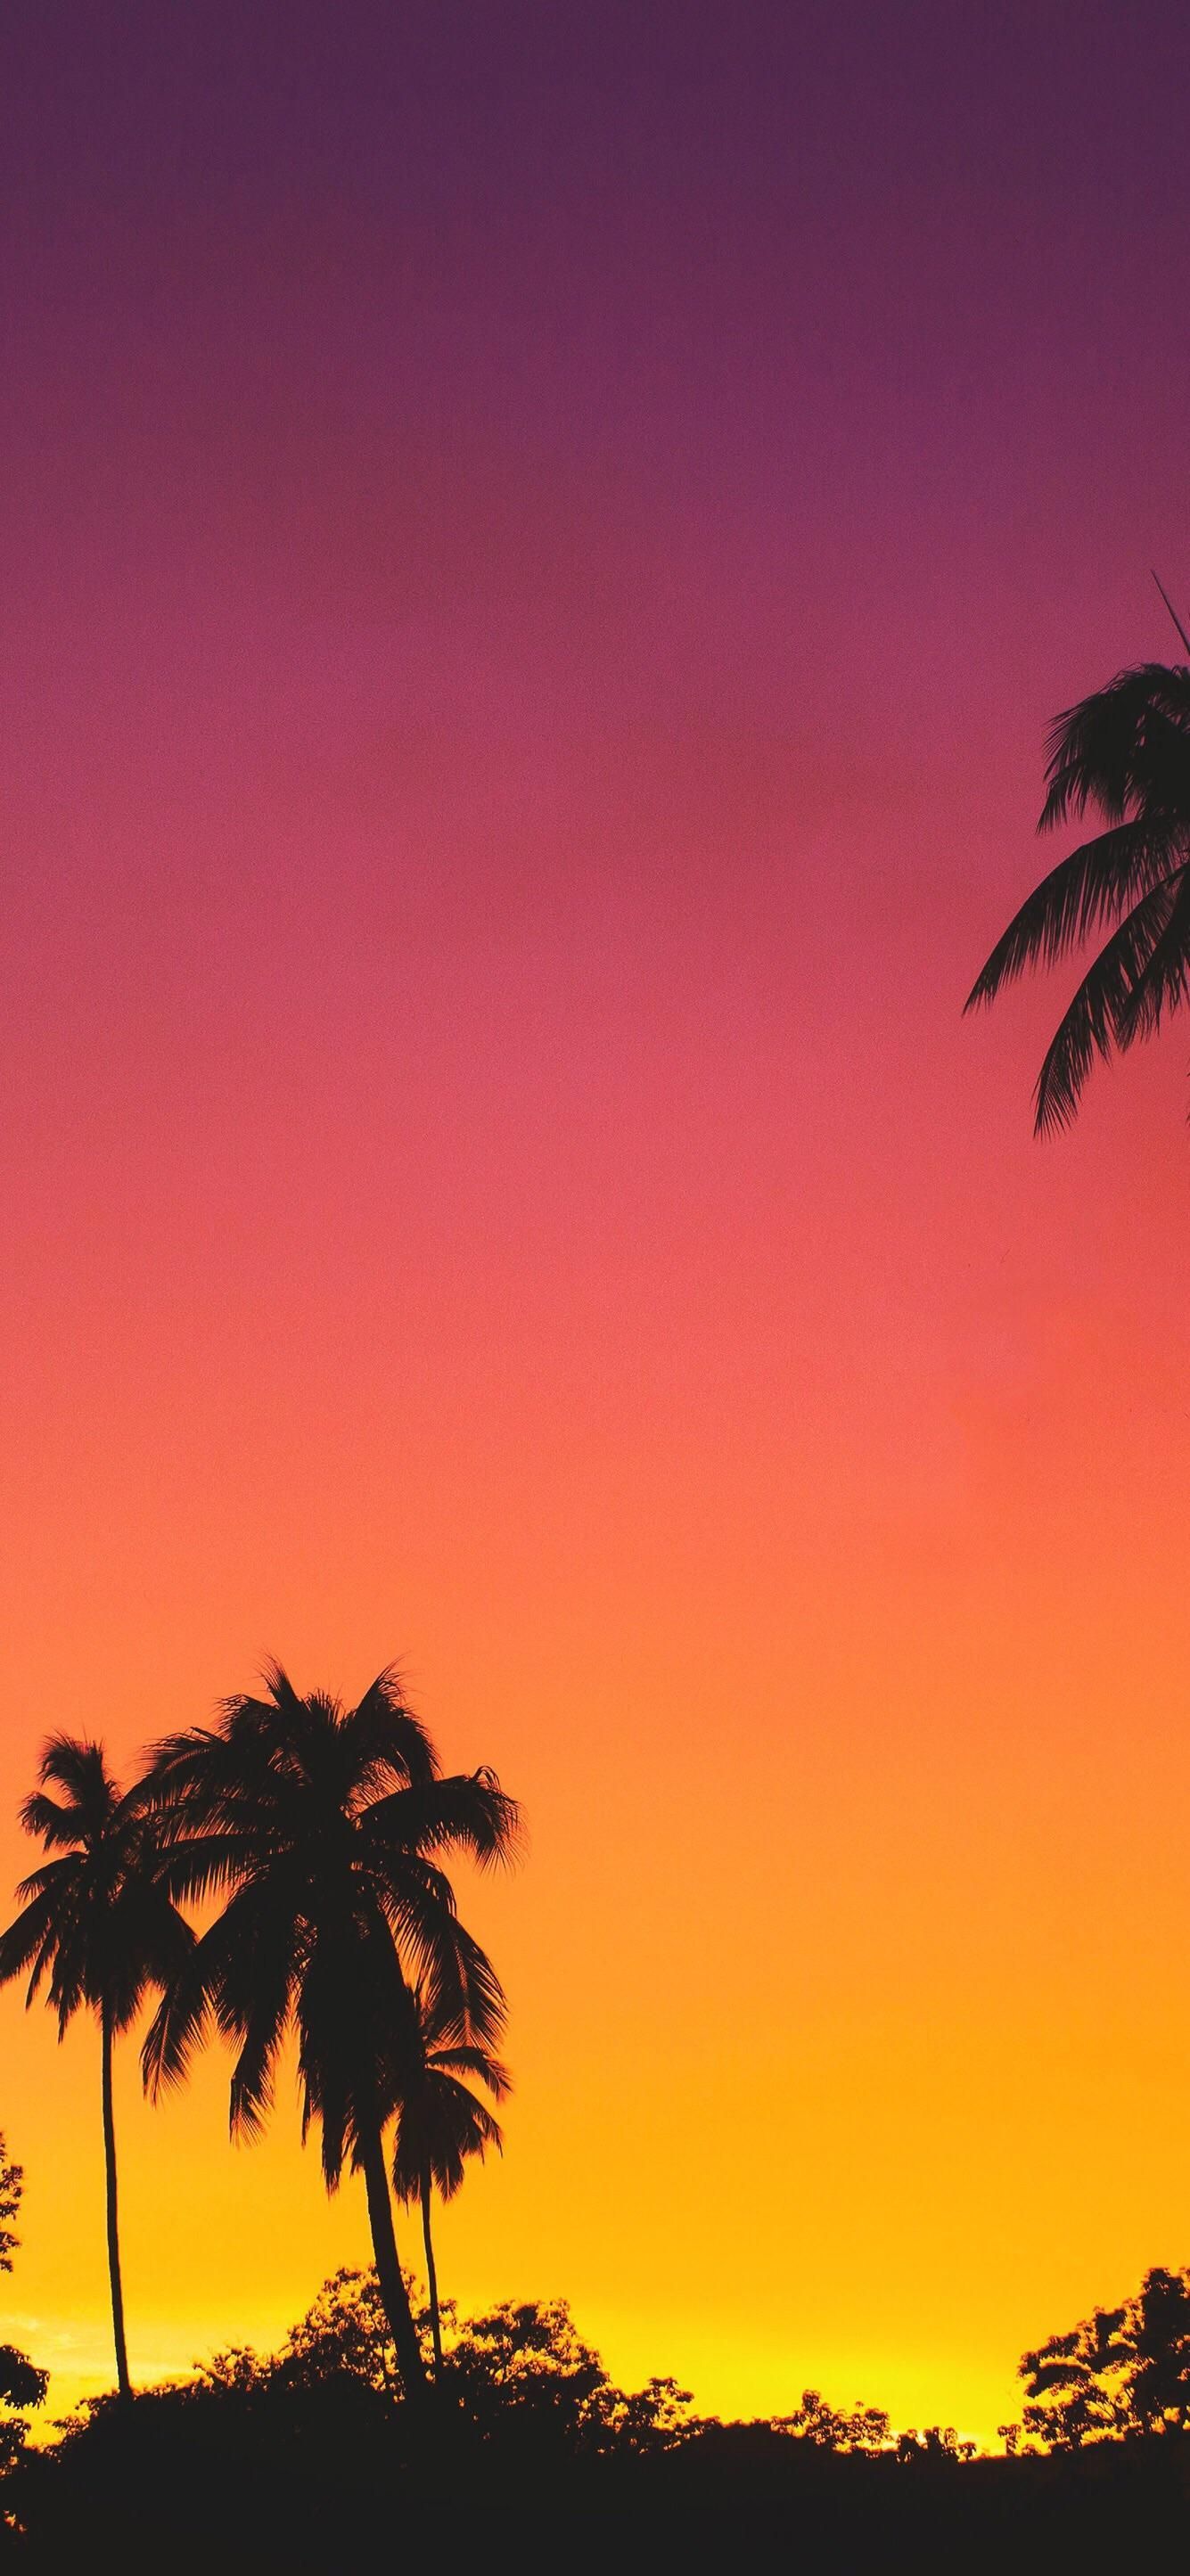 Tropical Paradise - Beaches & Nature Background Wallpapers on Desktop Nexus  (Image 2481739)